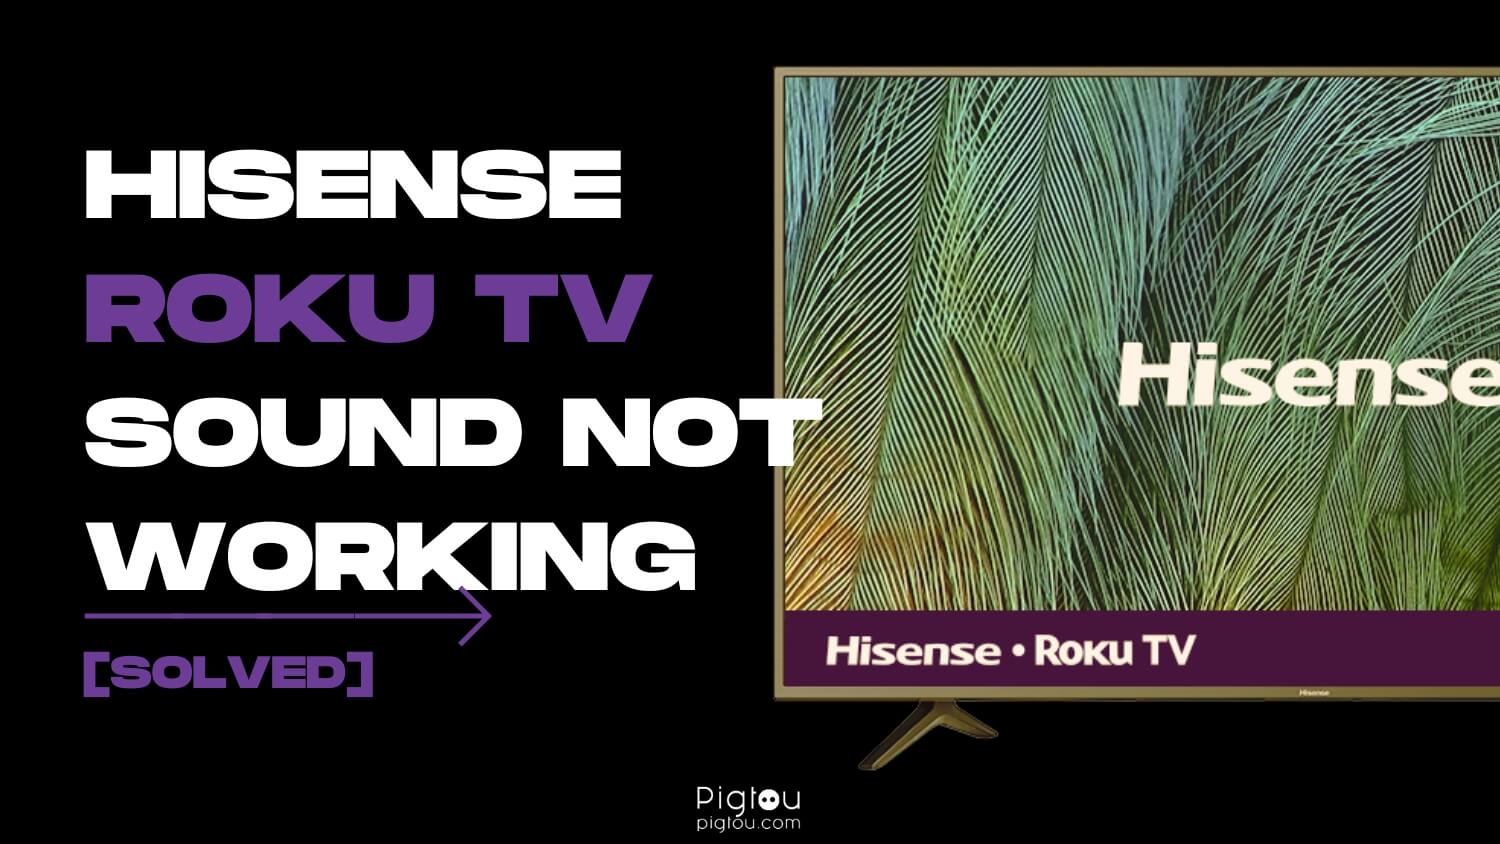 Hisense Roku TV Sound Not Working